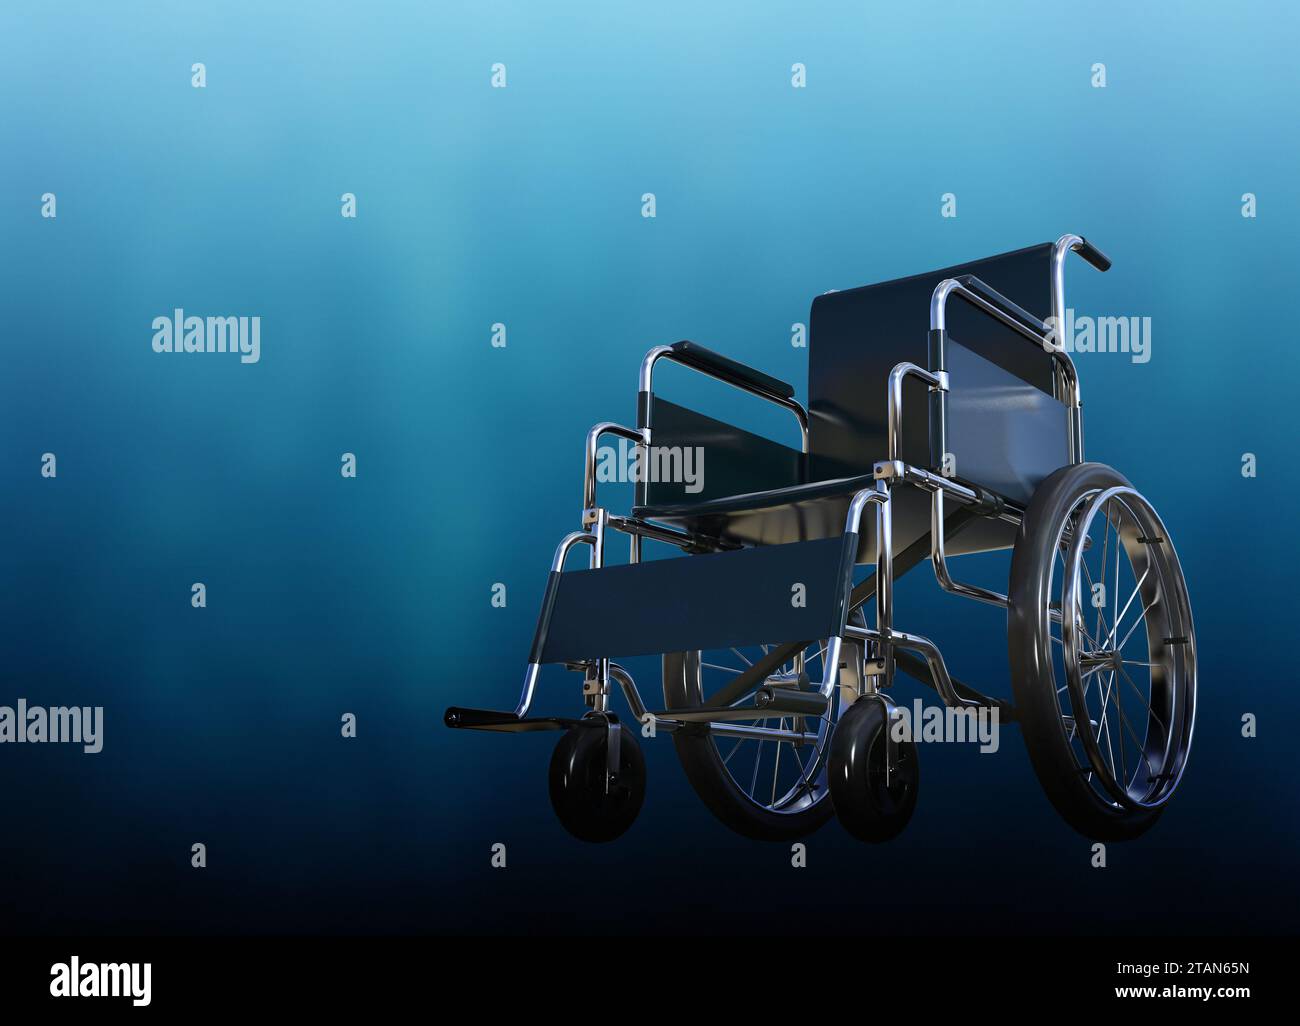 Disability, conceptual illustration Stock Photo